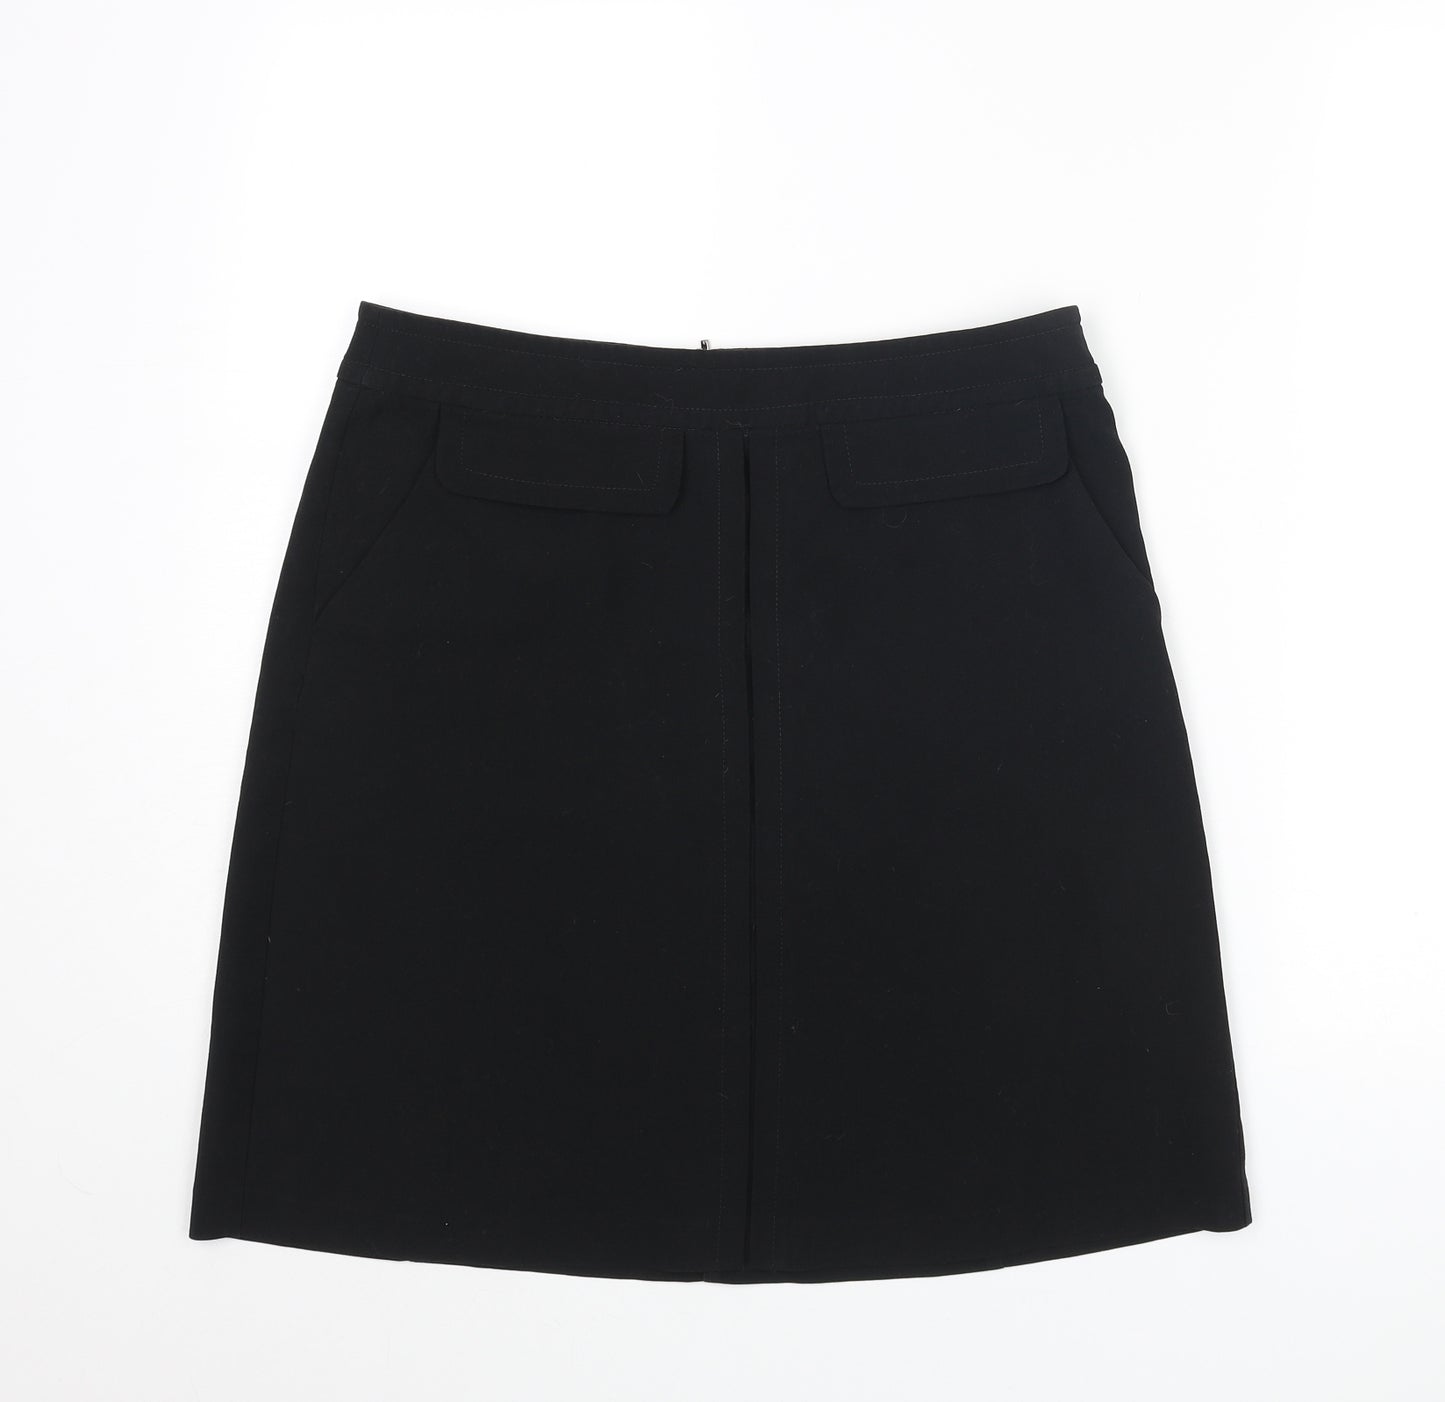 NEXT Womens Black Polyester A-Line Skirt Size 10 Zip